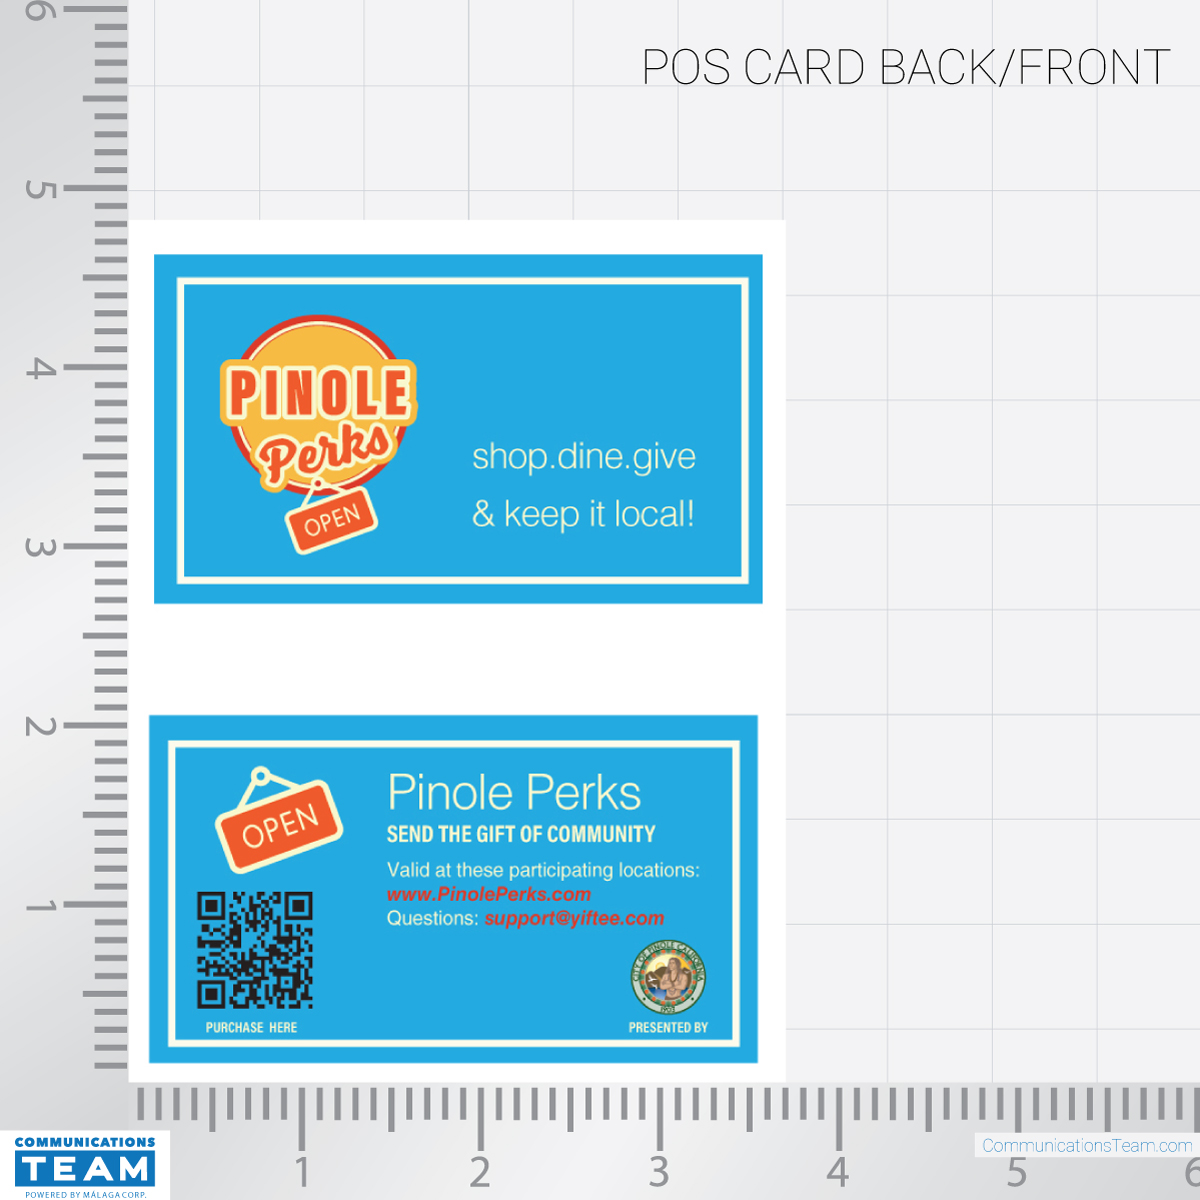 Communications-Team-Portfolio-Pinole-Perks-POS-card